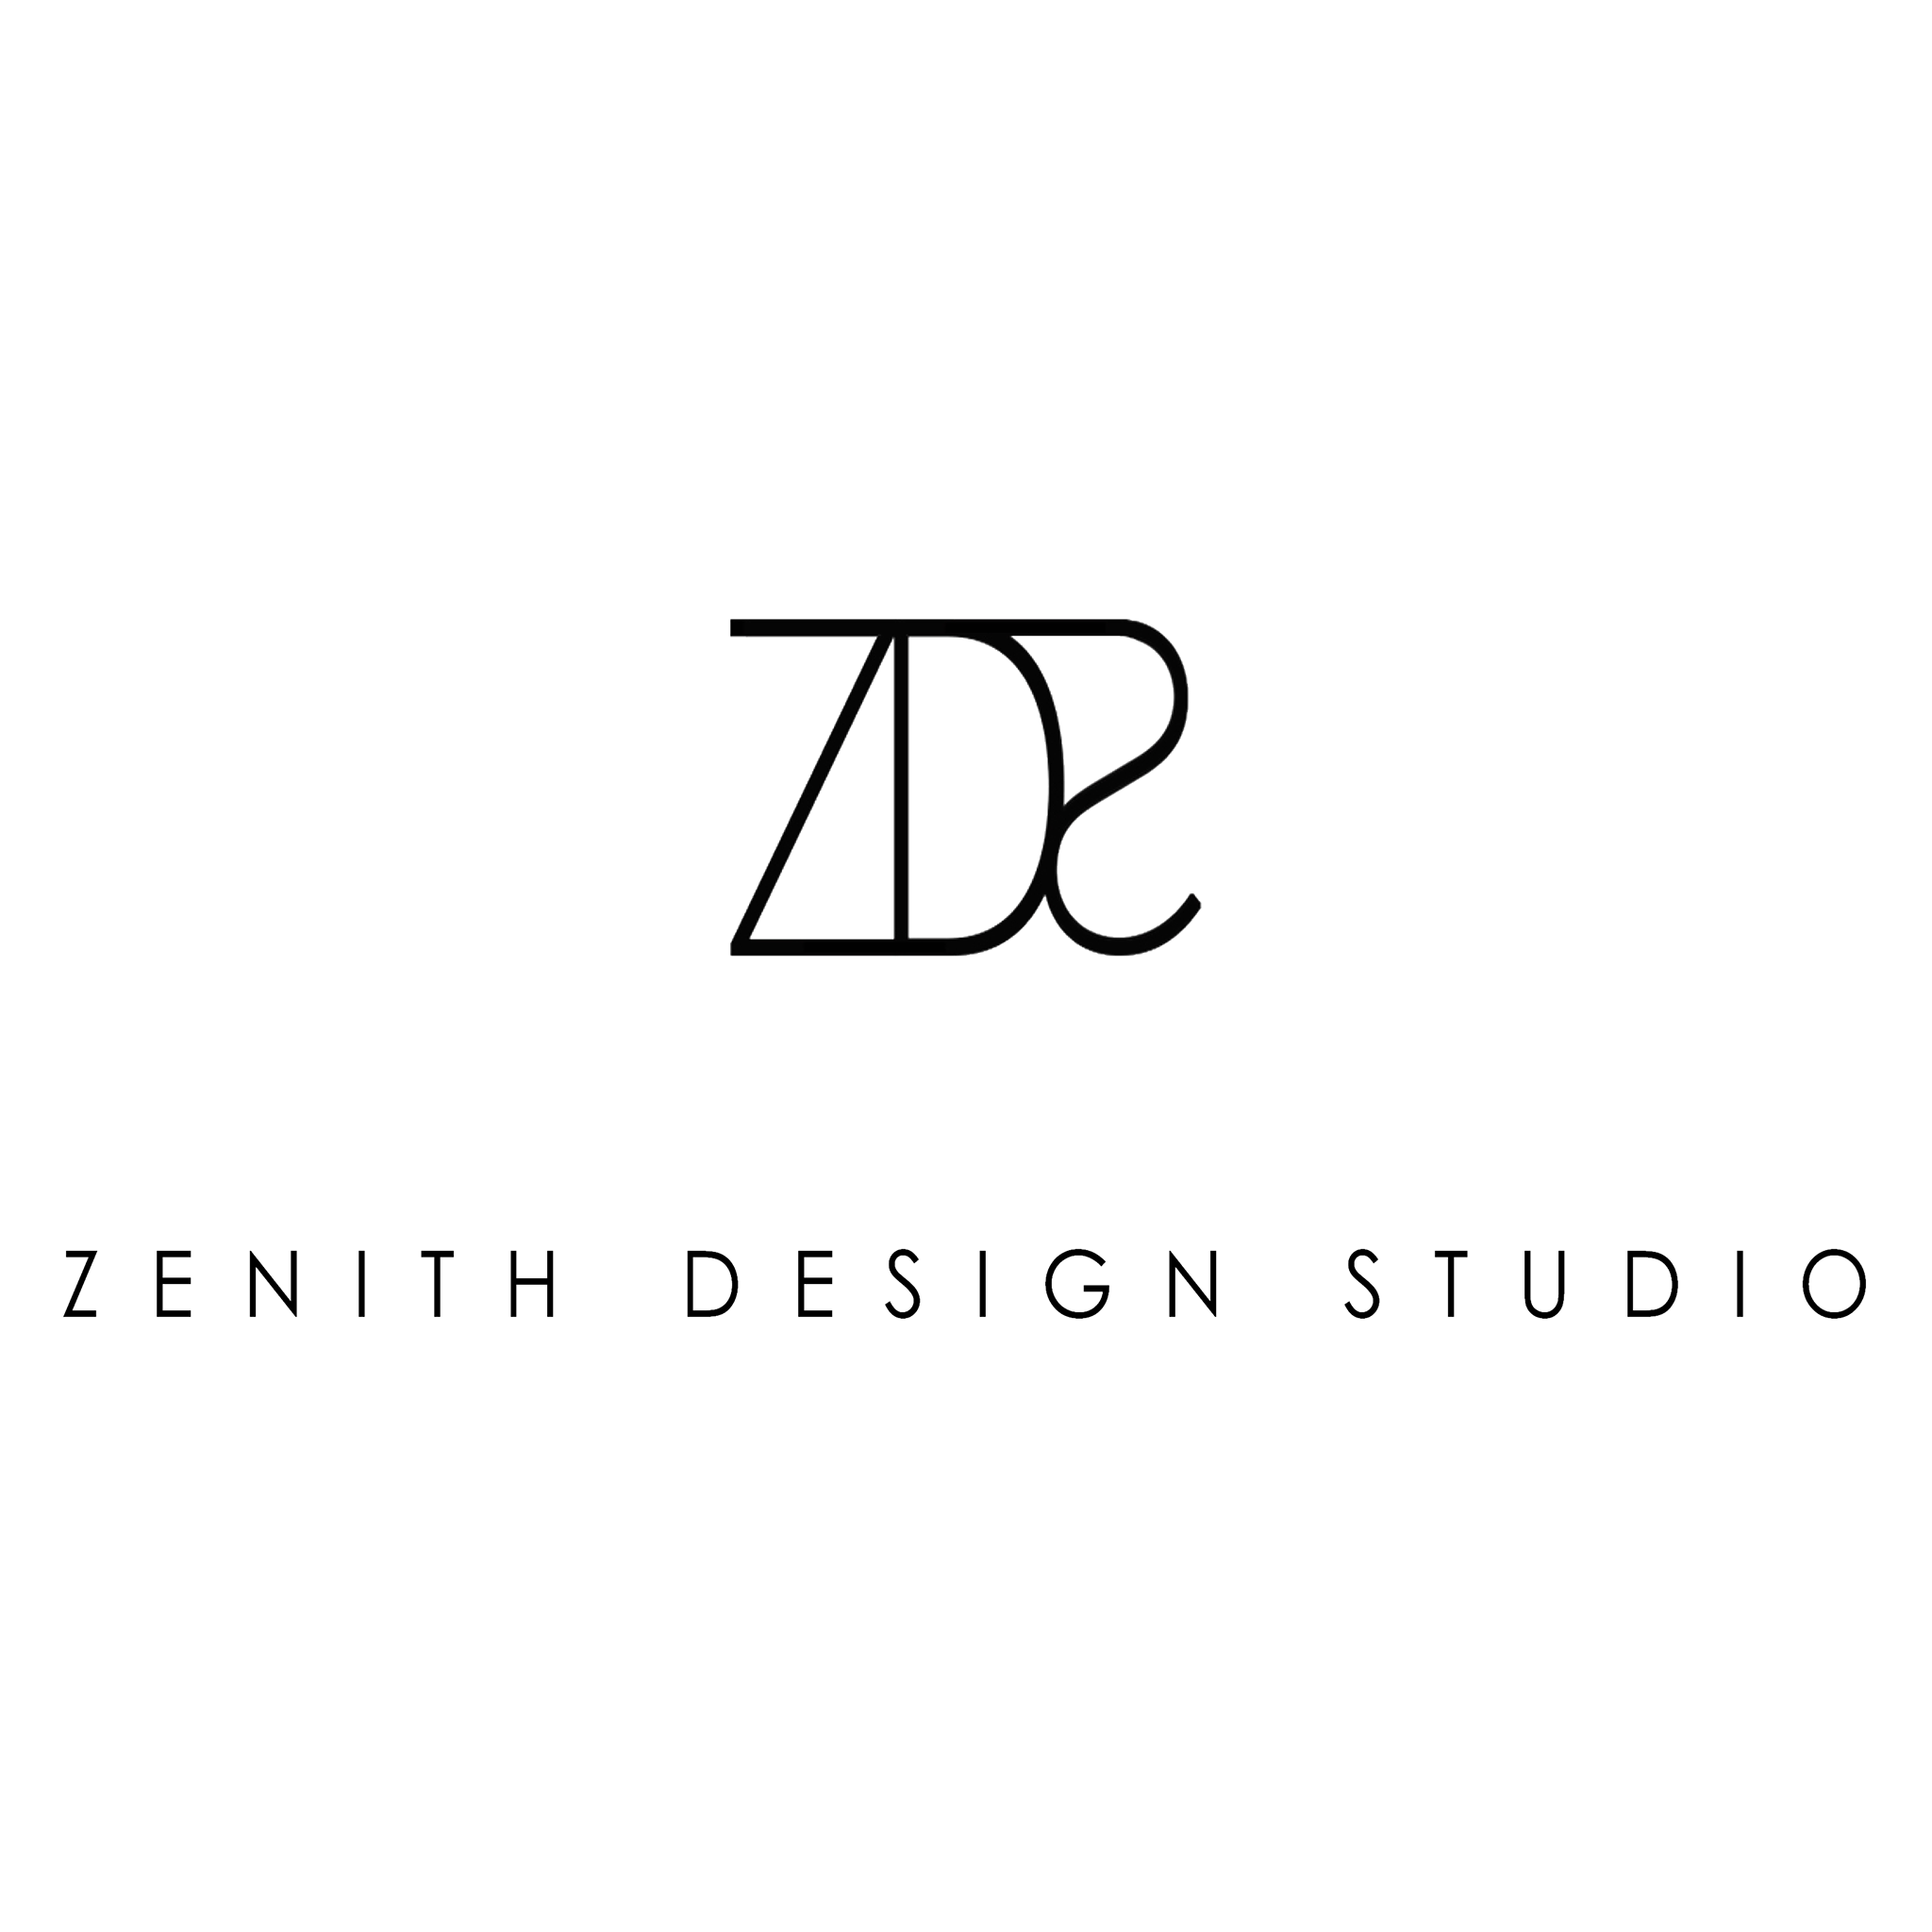 Zenith Design Studio|Legal Services|Professional Services